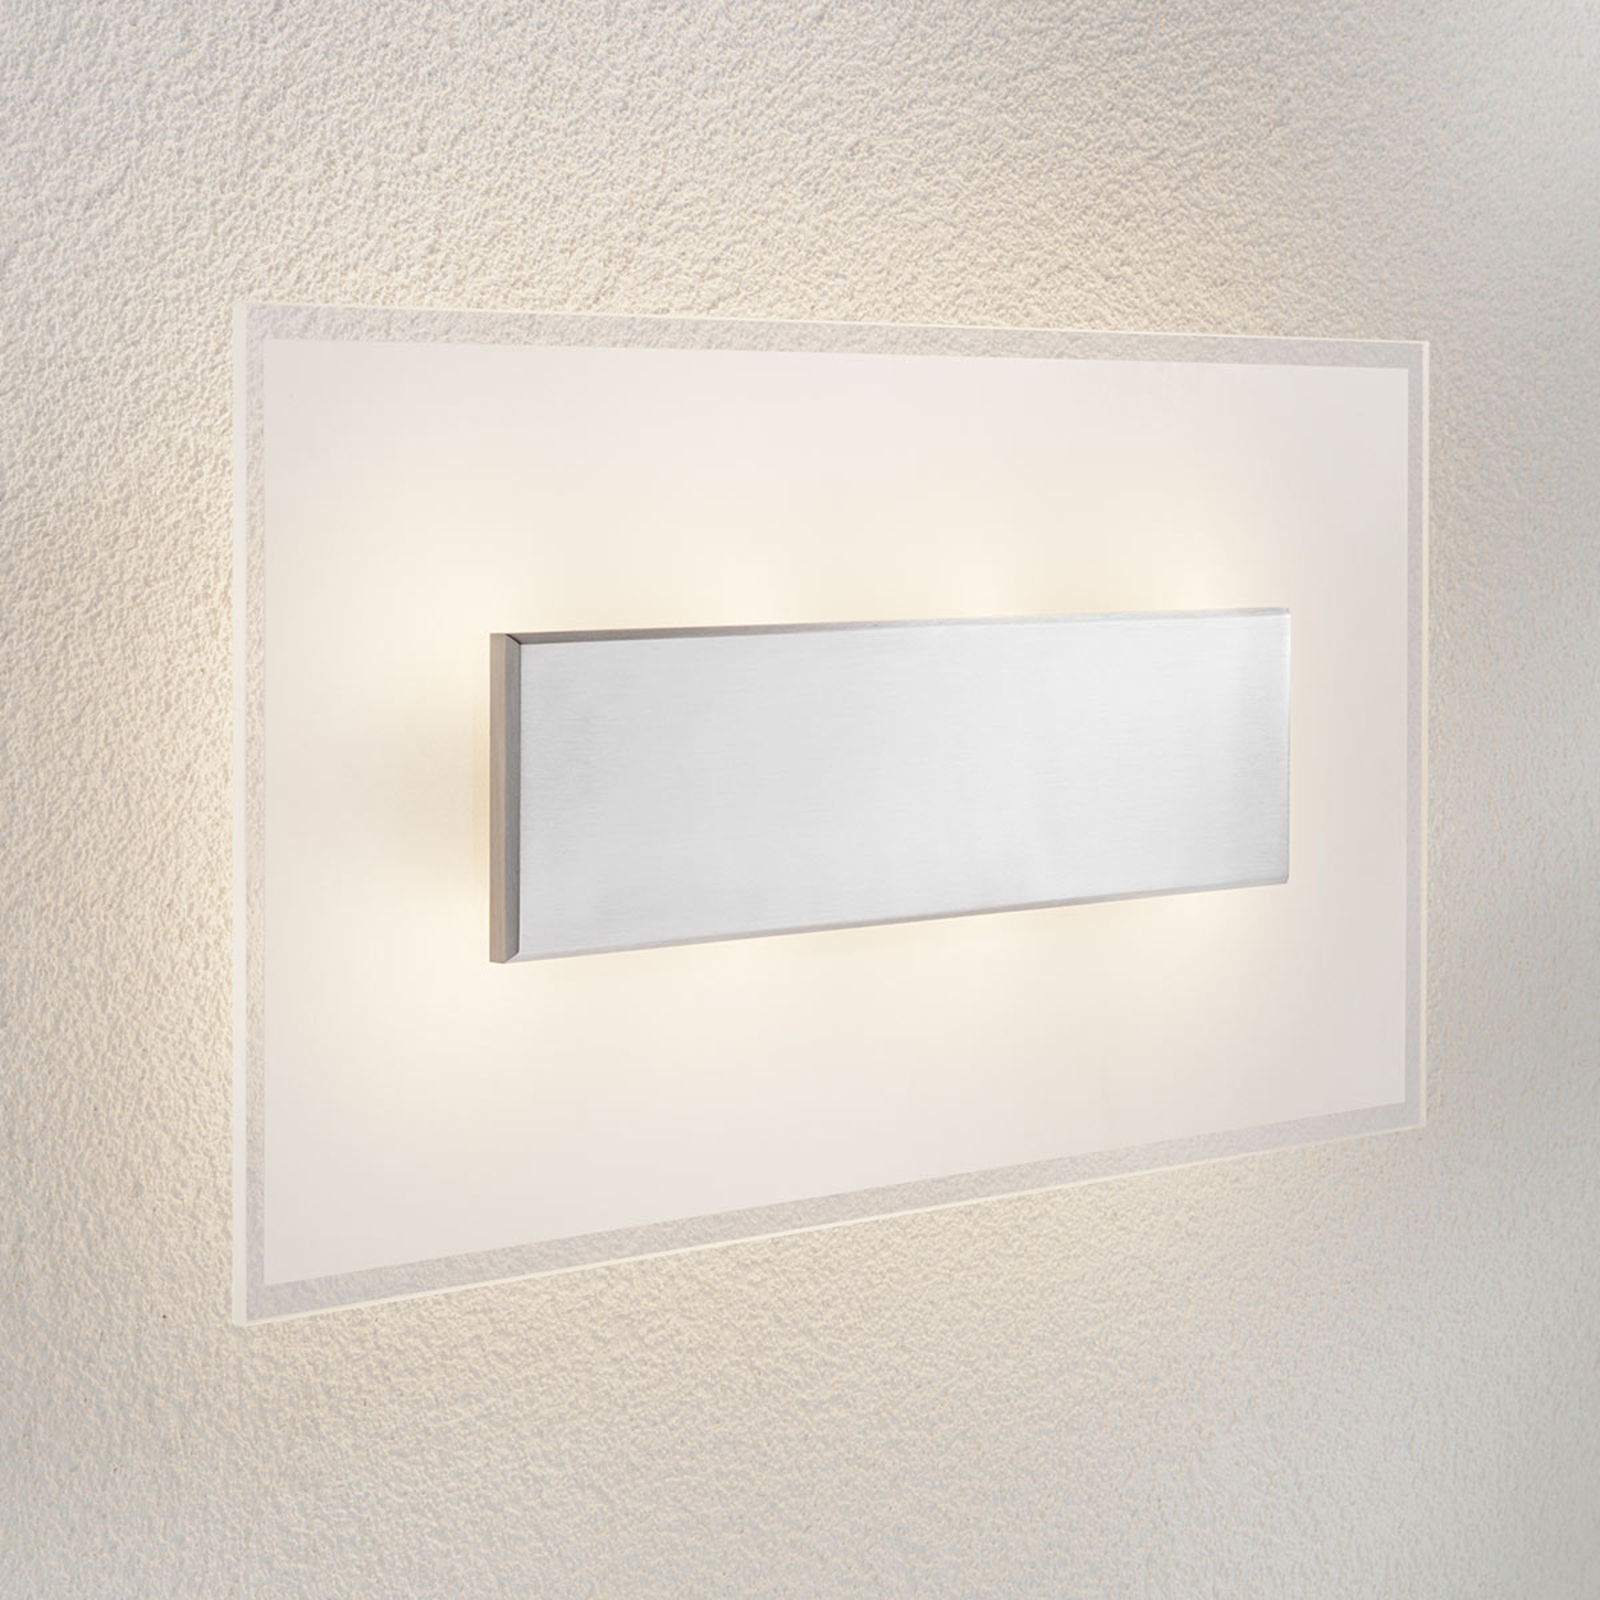 Rothfels Lole LED glass wall light, alu, 59x29 cm